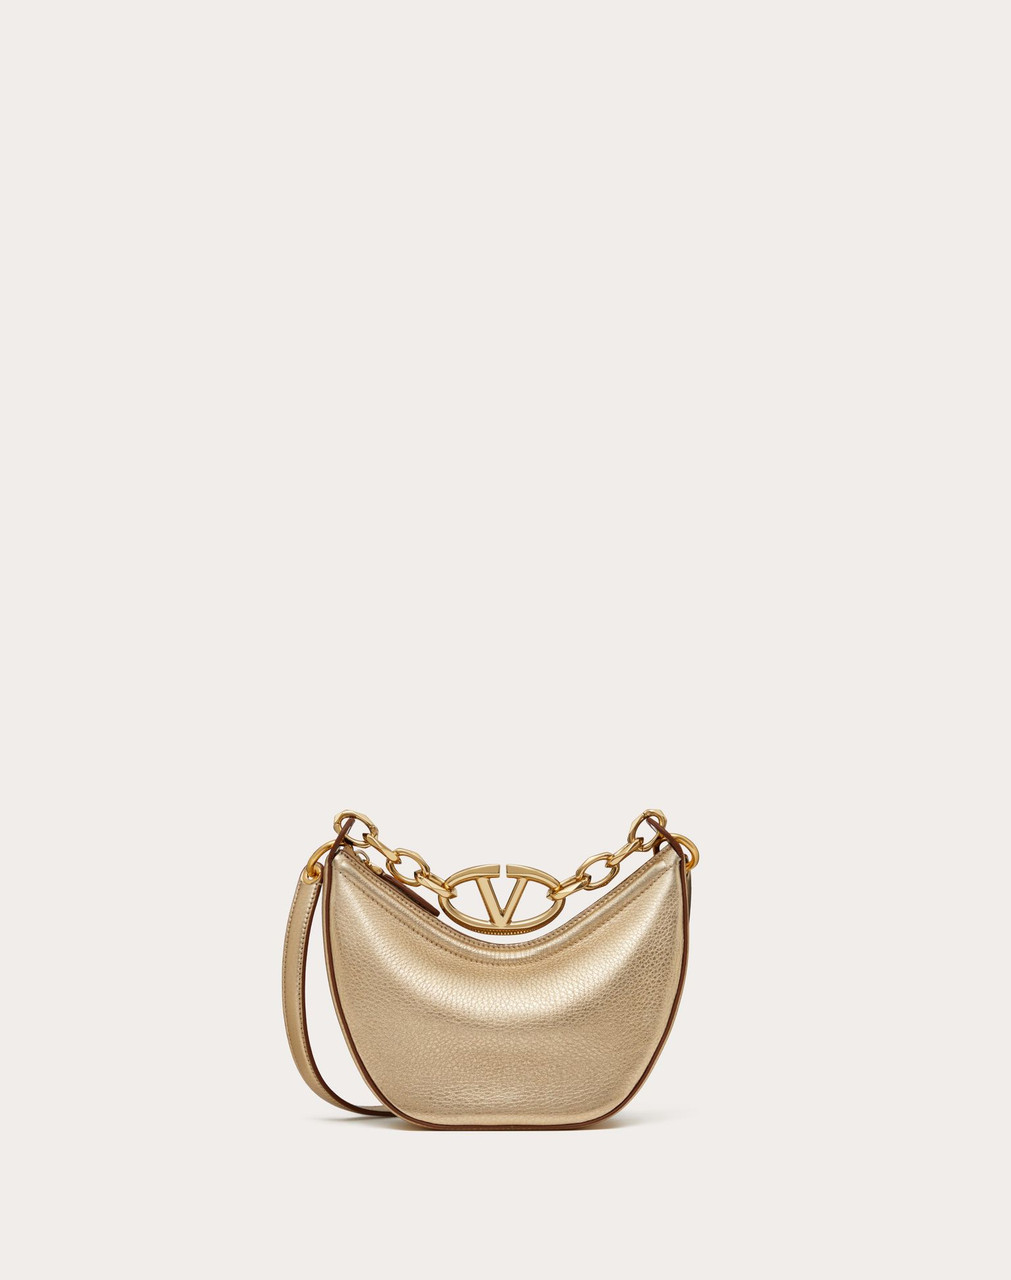 Valentino : r/handbags